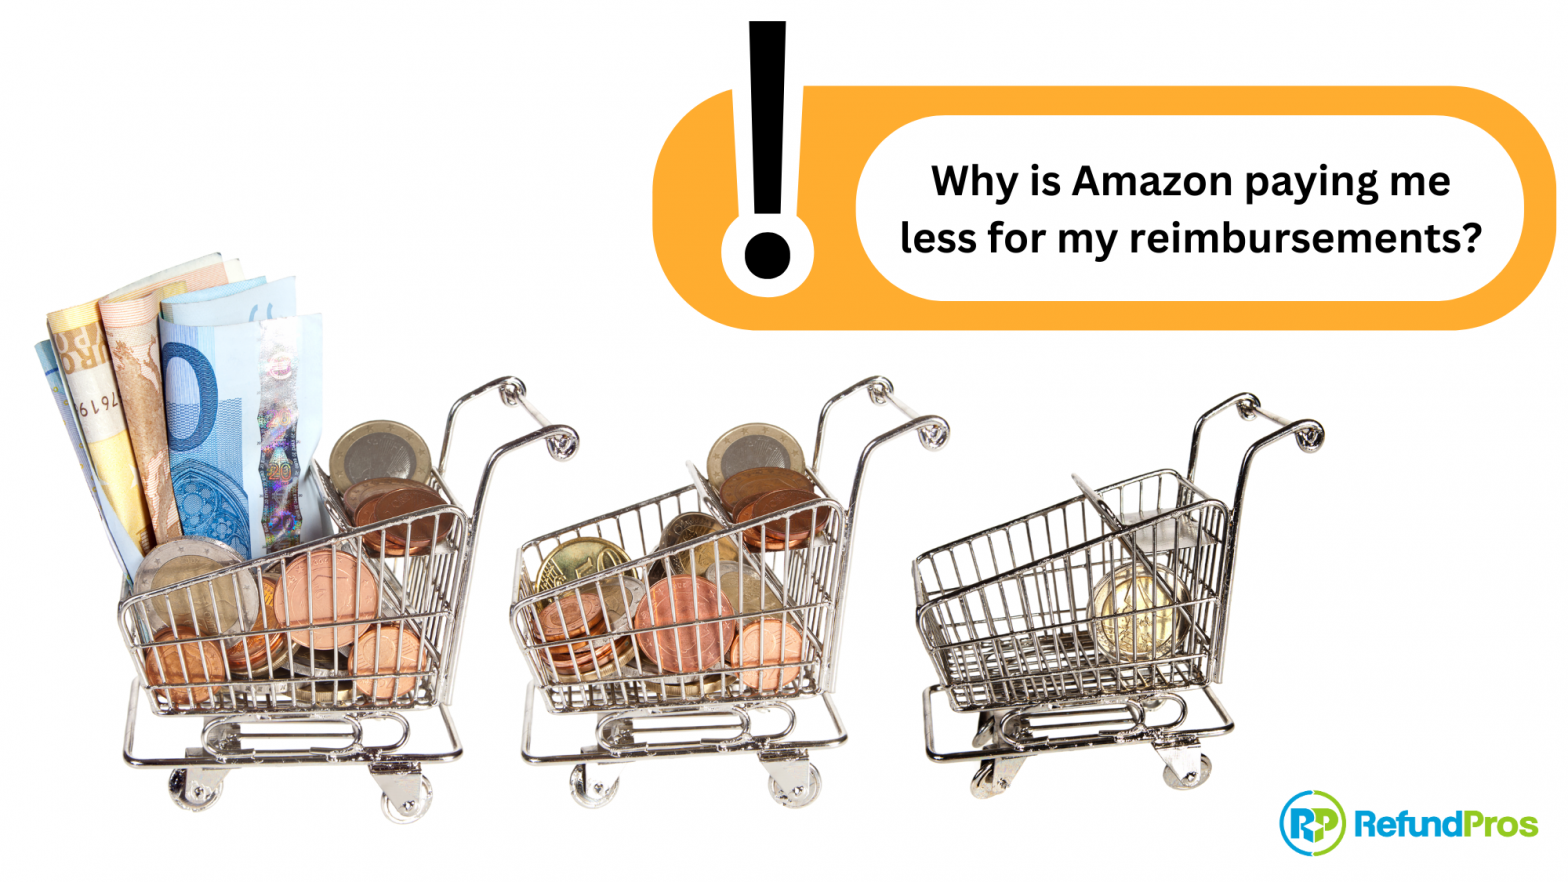 Amazon paying less for a reimbursement.